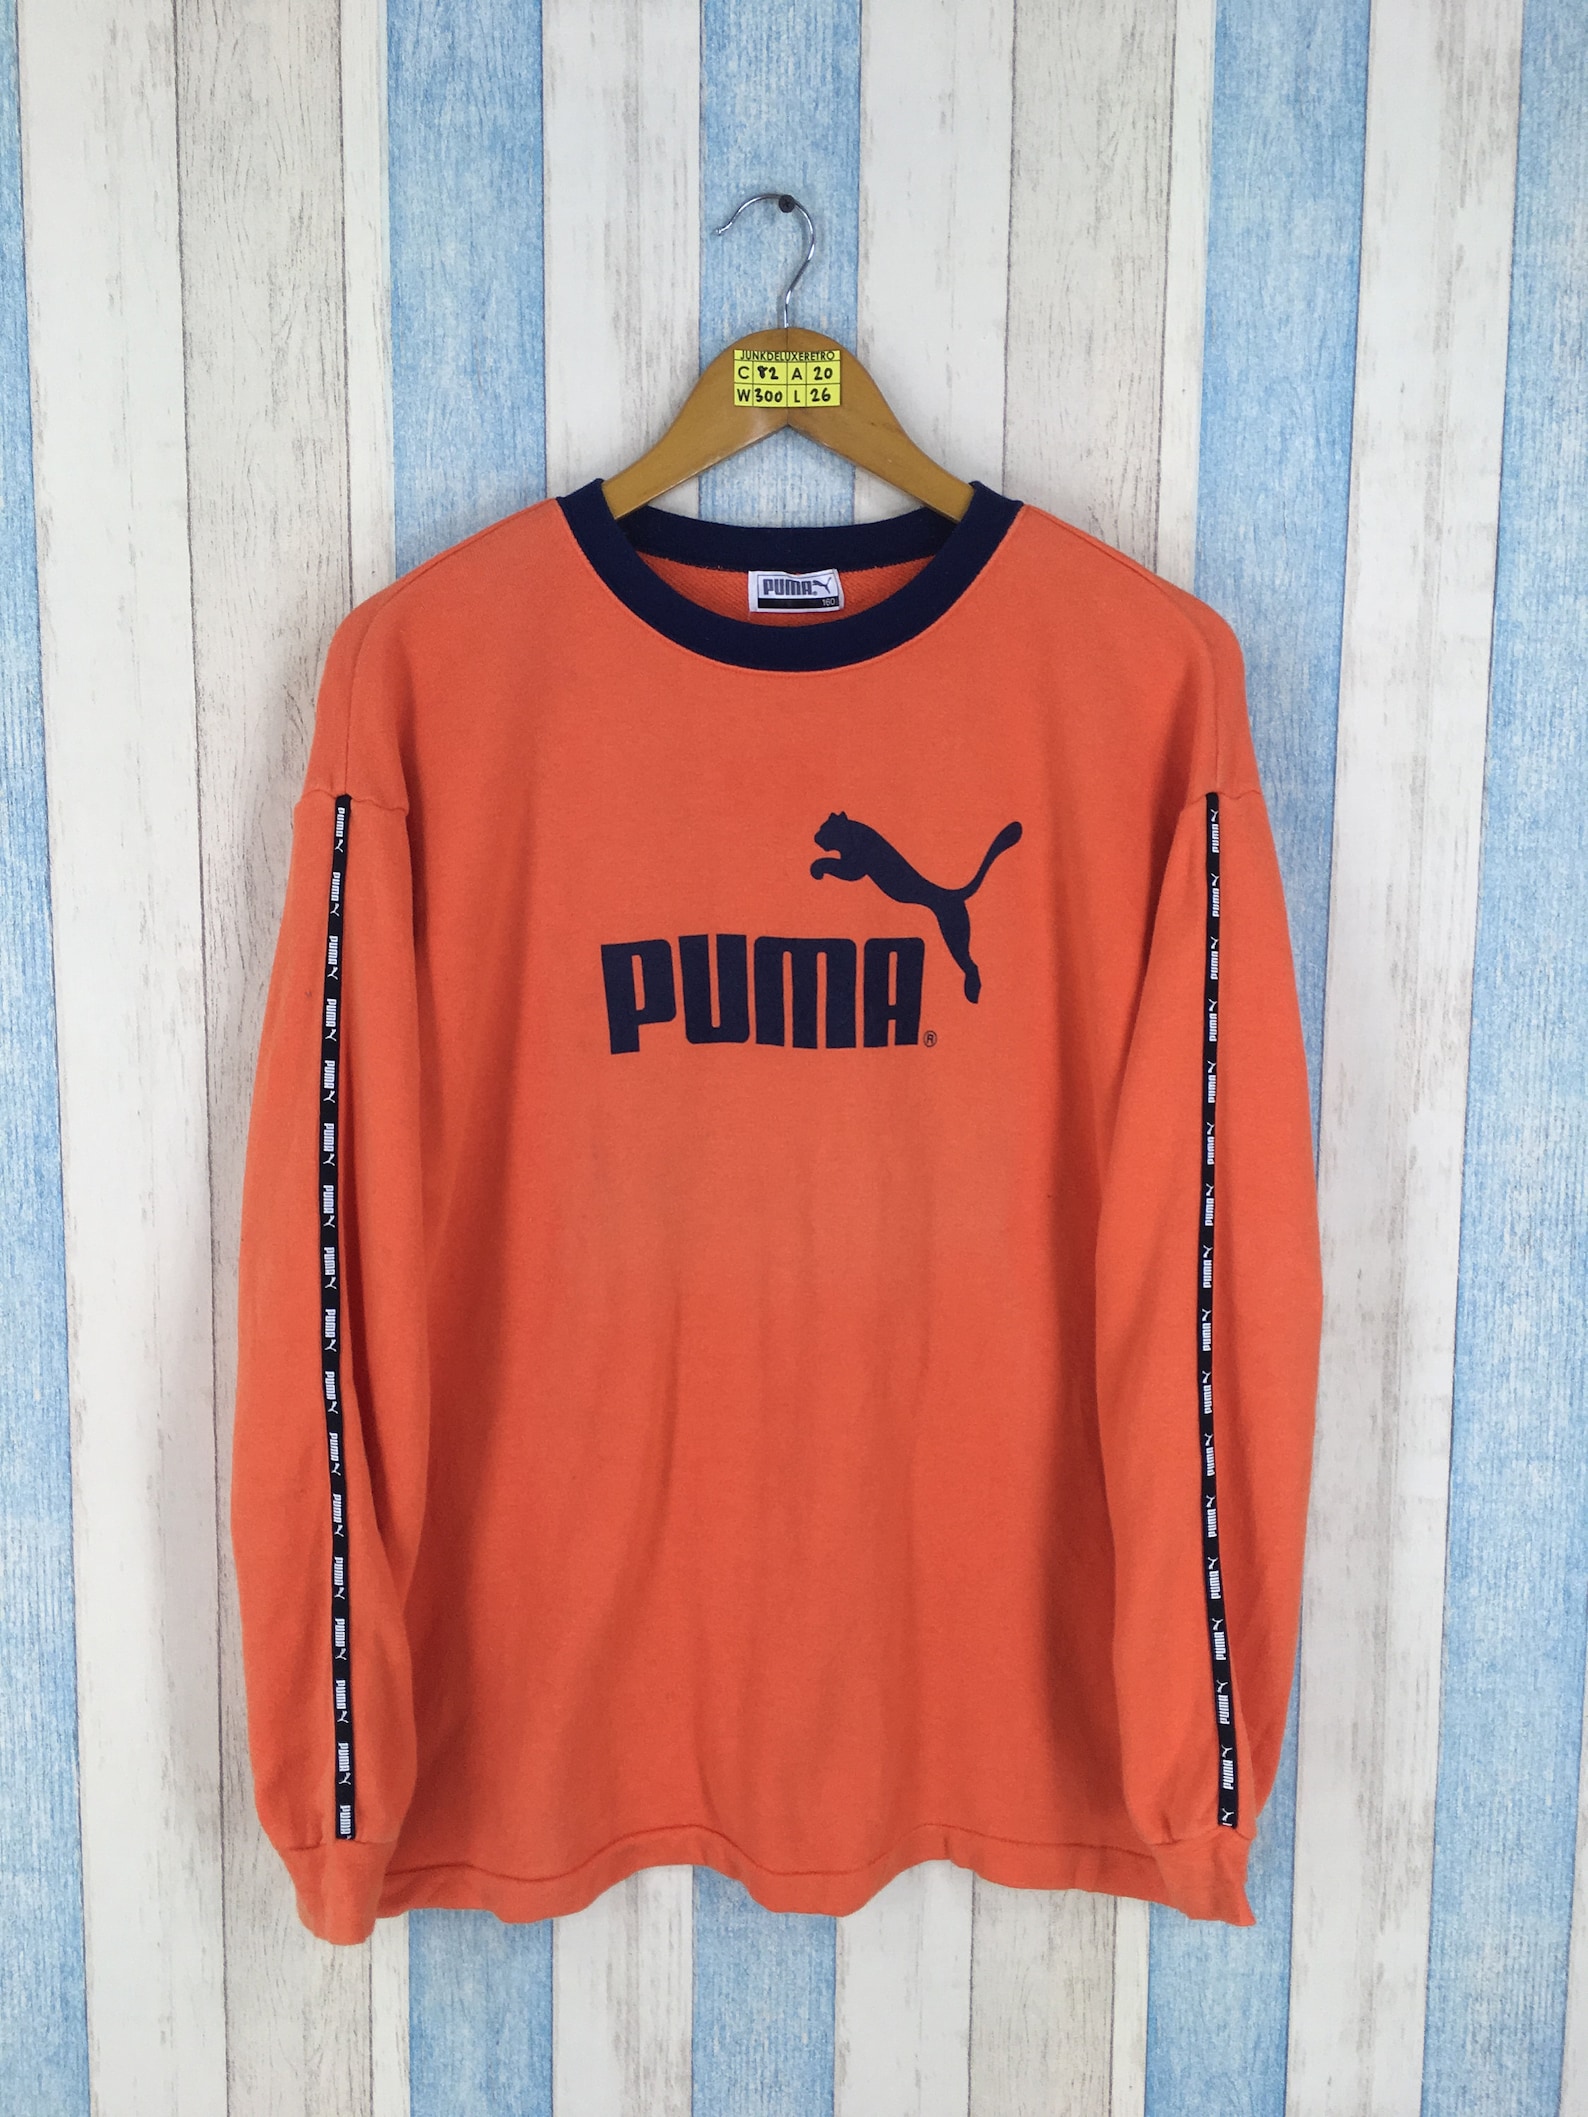 Puma Sweater Small Orange Ladies Vintage Puma Big Logo | Etsy